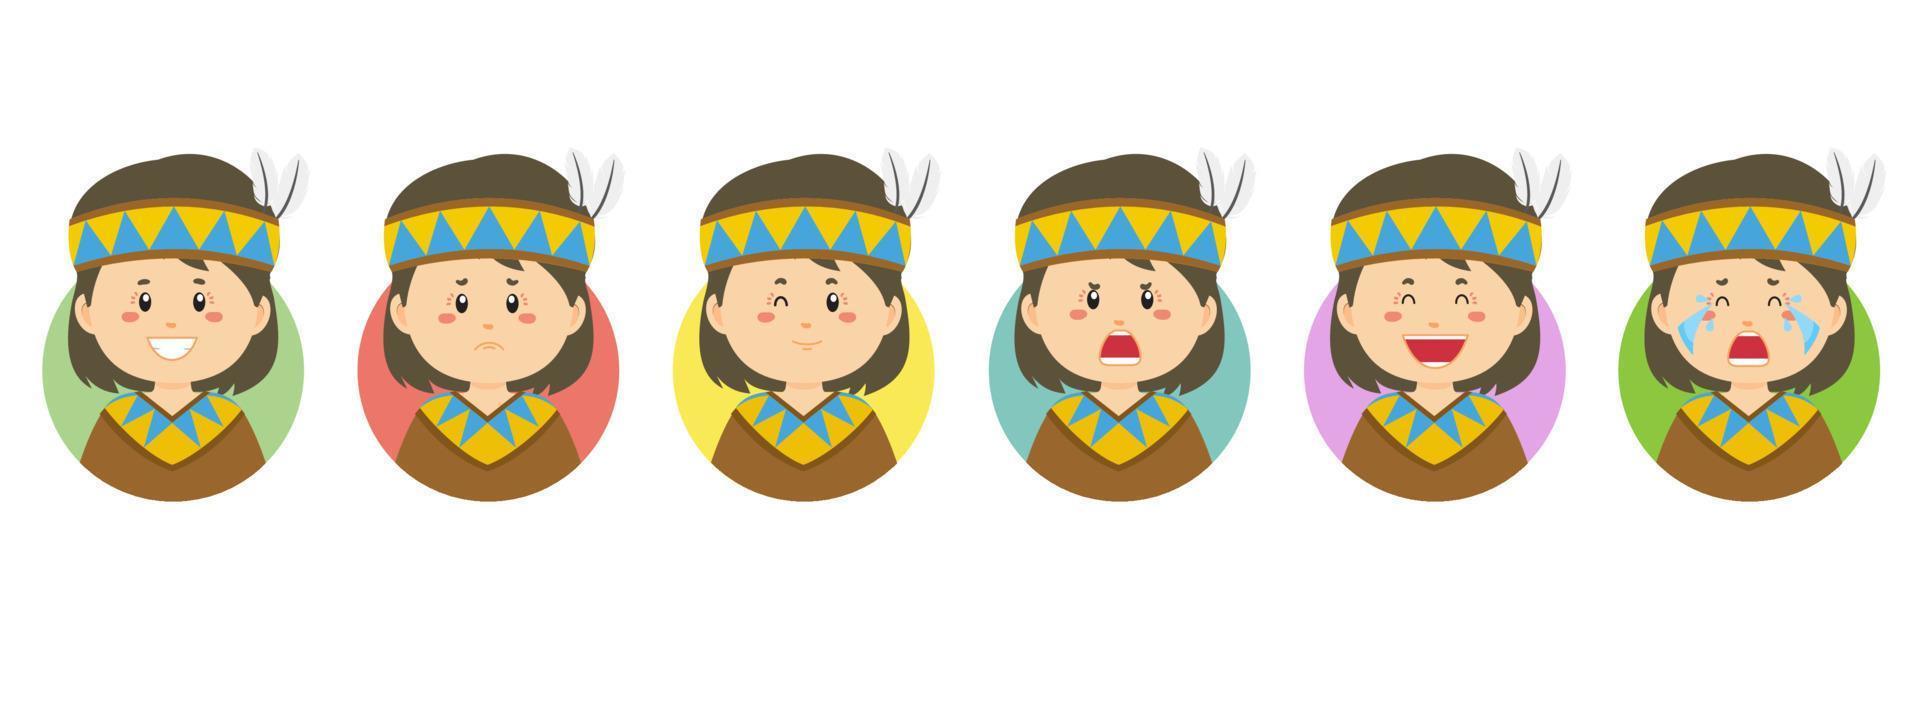 native america avatar med olika uttryck vektor